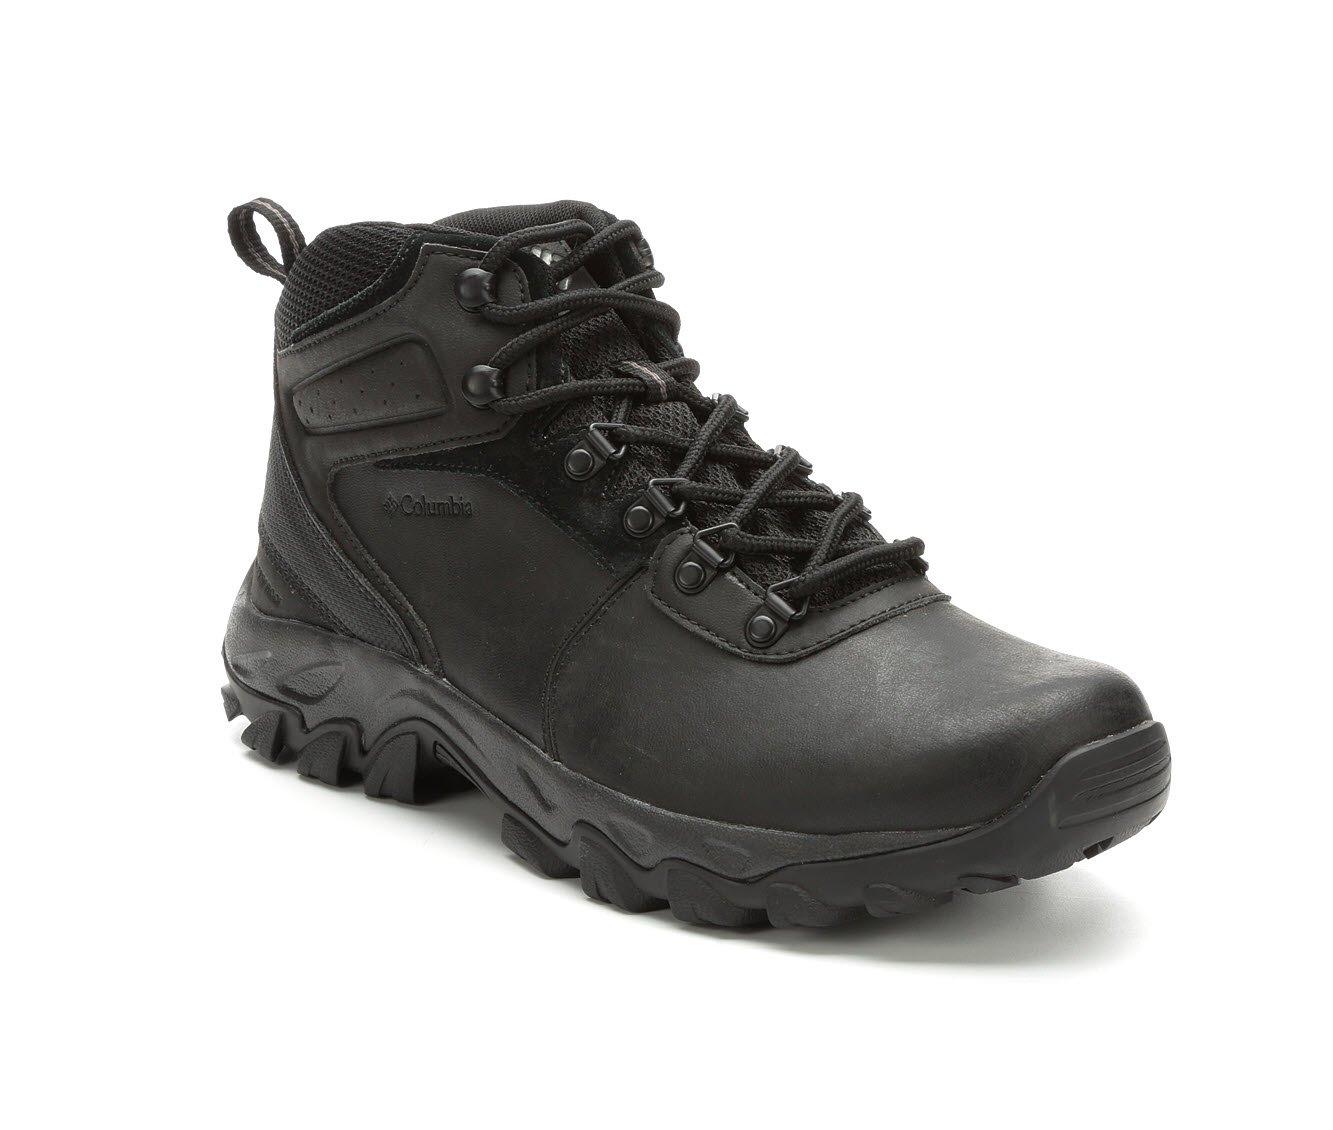 Men's Columbia Newton Ridge Plus II Waterproof Hiking Boots | Shoe Carnival